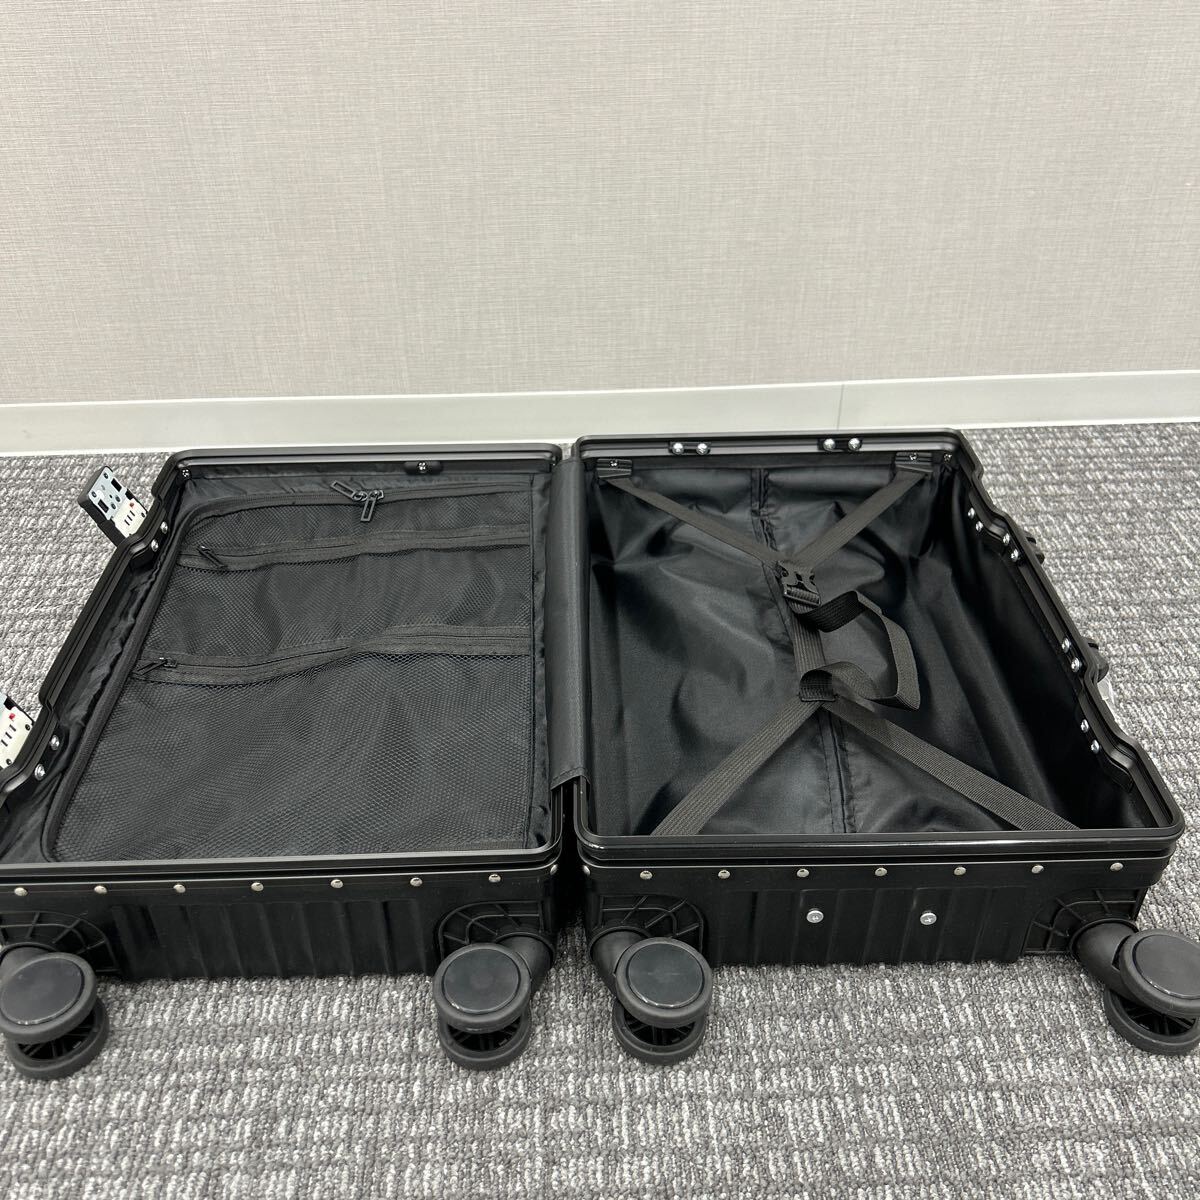  Carry case suitcase machine inside bringing in 40L carry bag black 